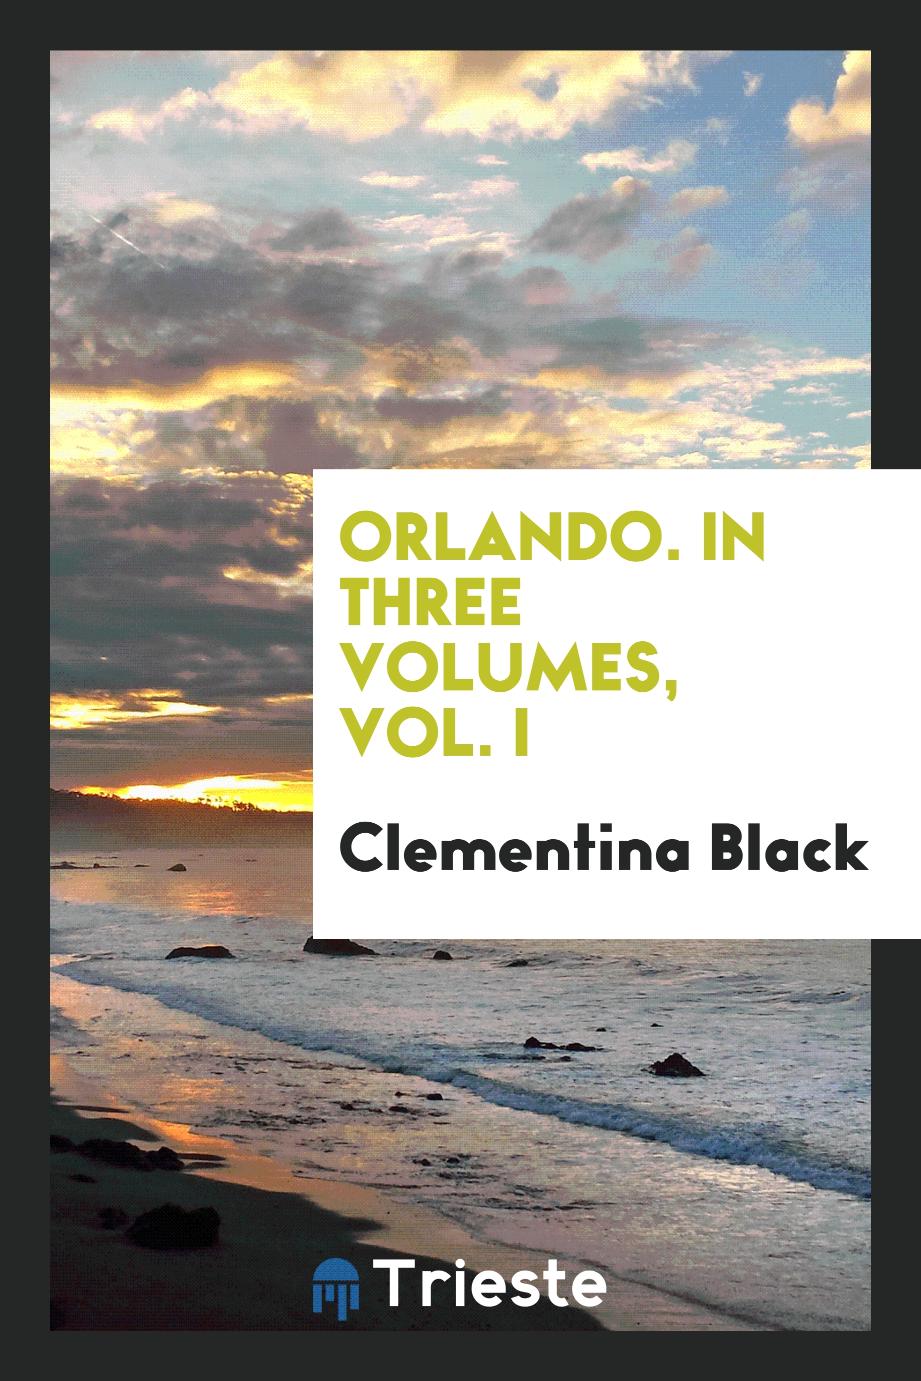 Orlando. In three volumes, Vol. I